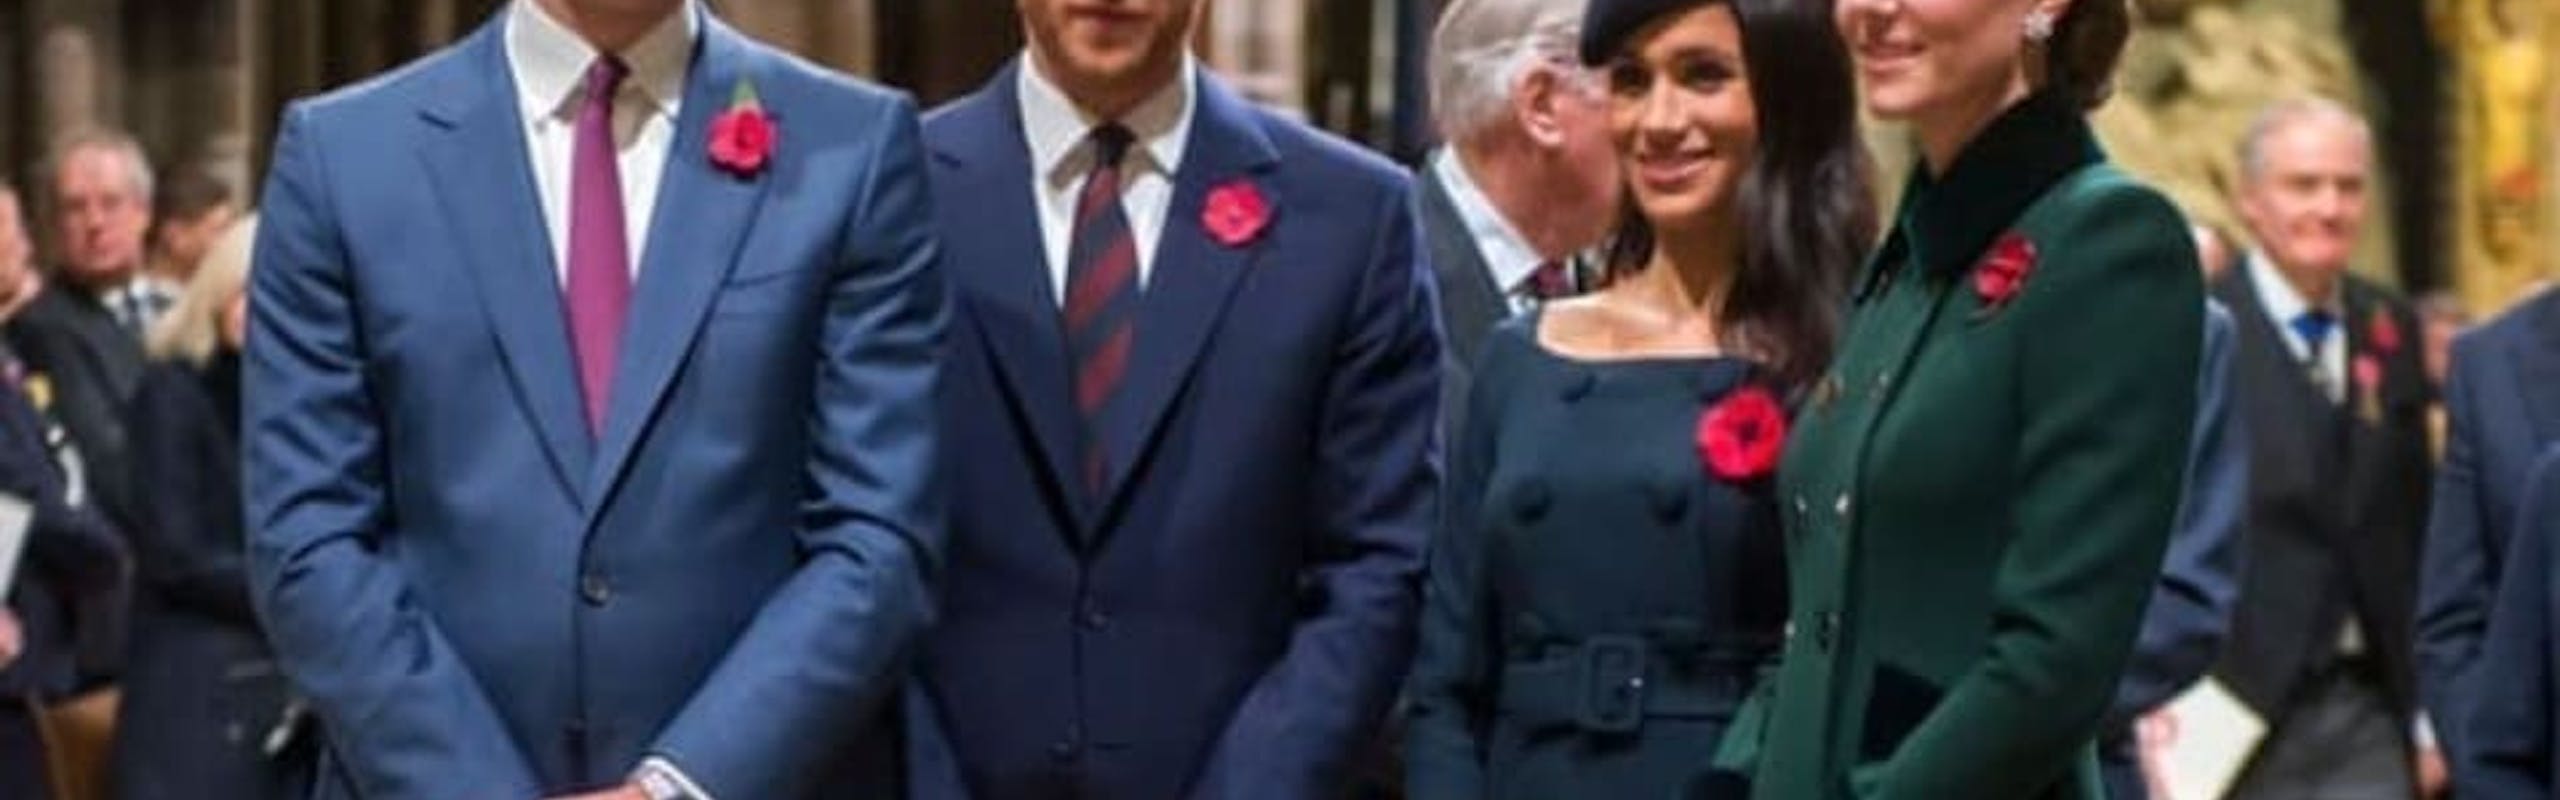 Meghan Markle, príncipe Harry,  Kate Middleton, príncipe William